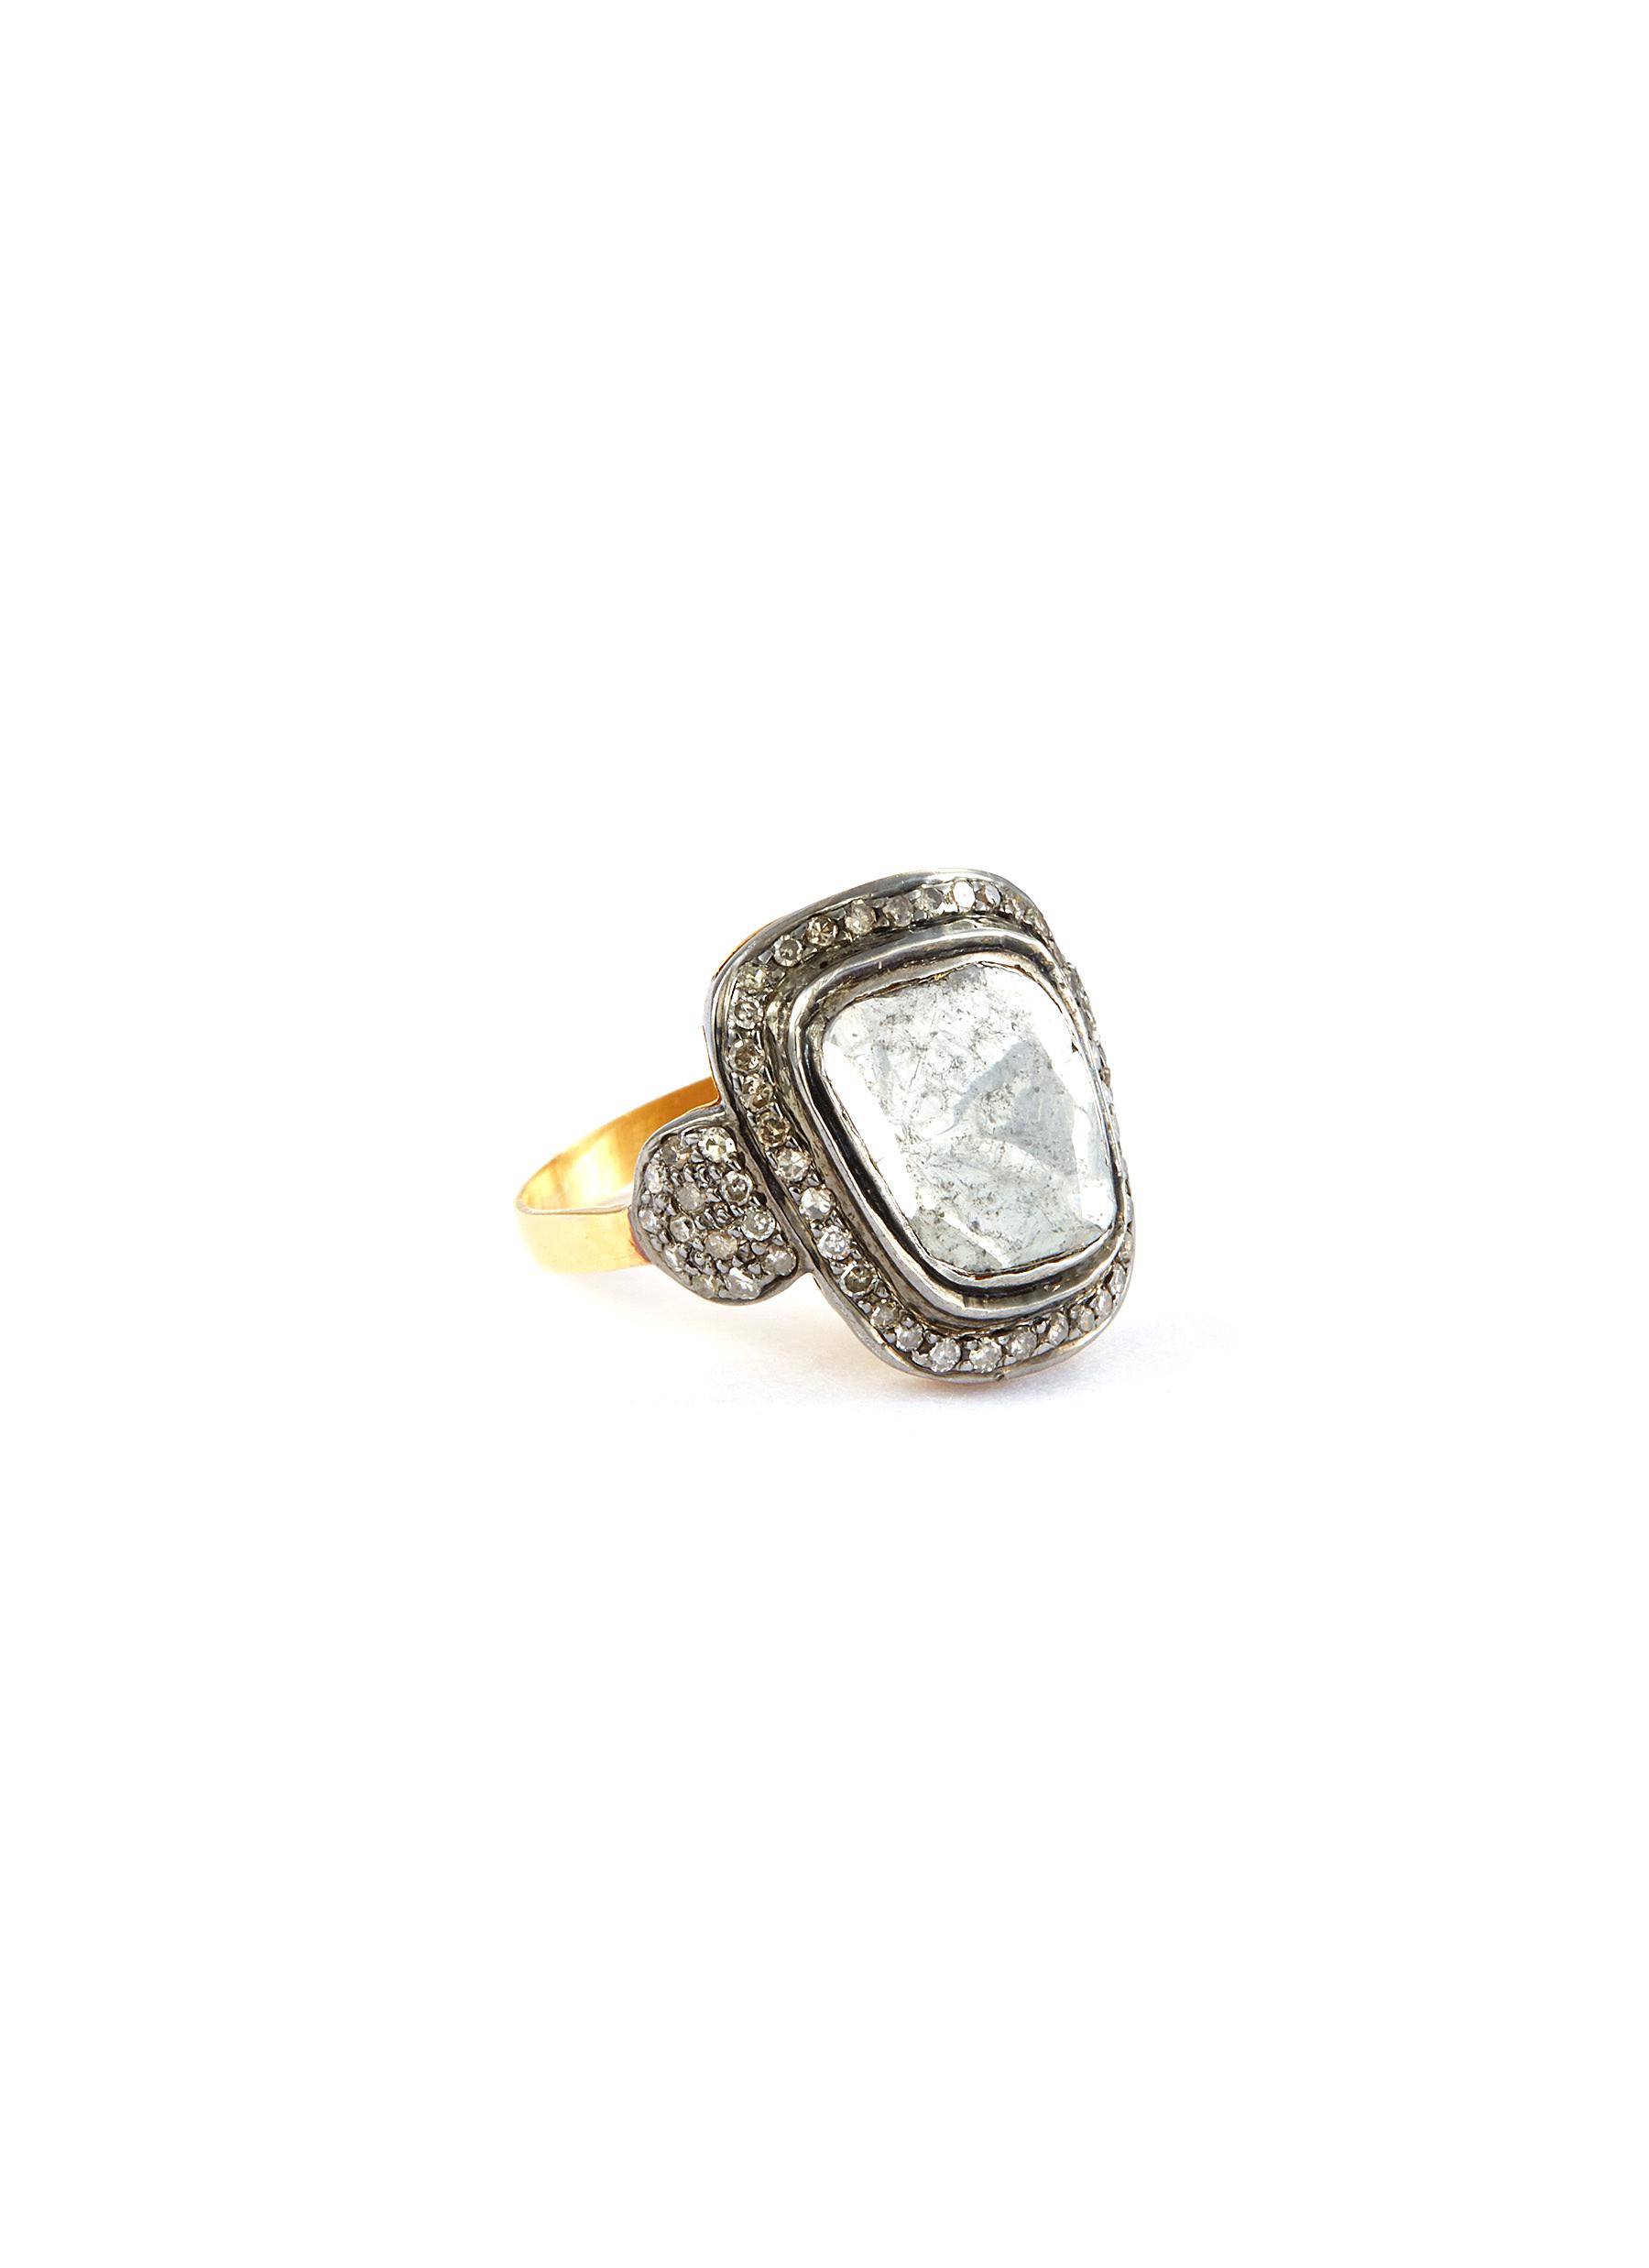 Polki' diamond gold and silver ring 